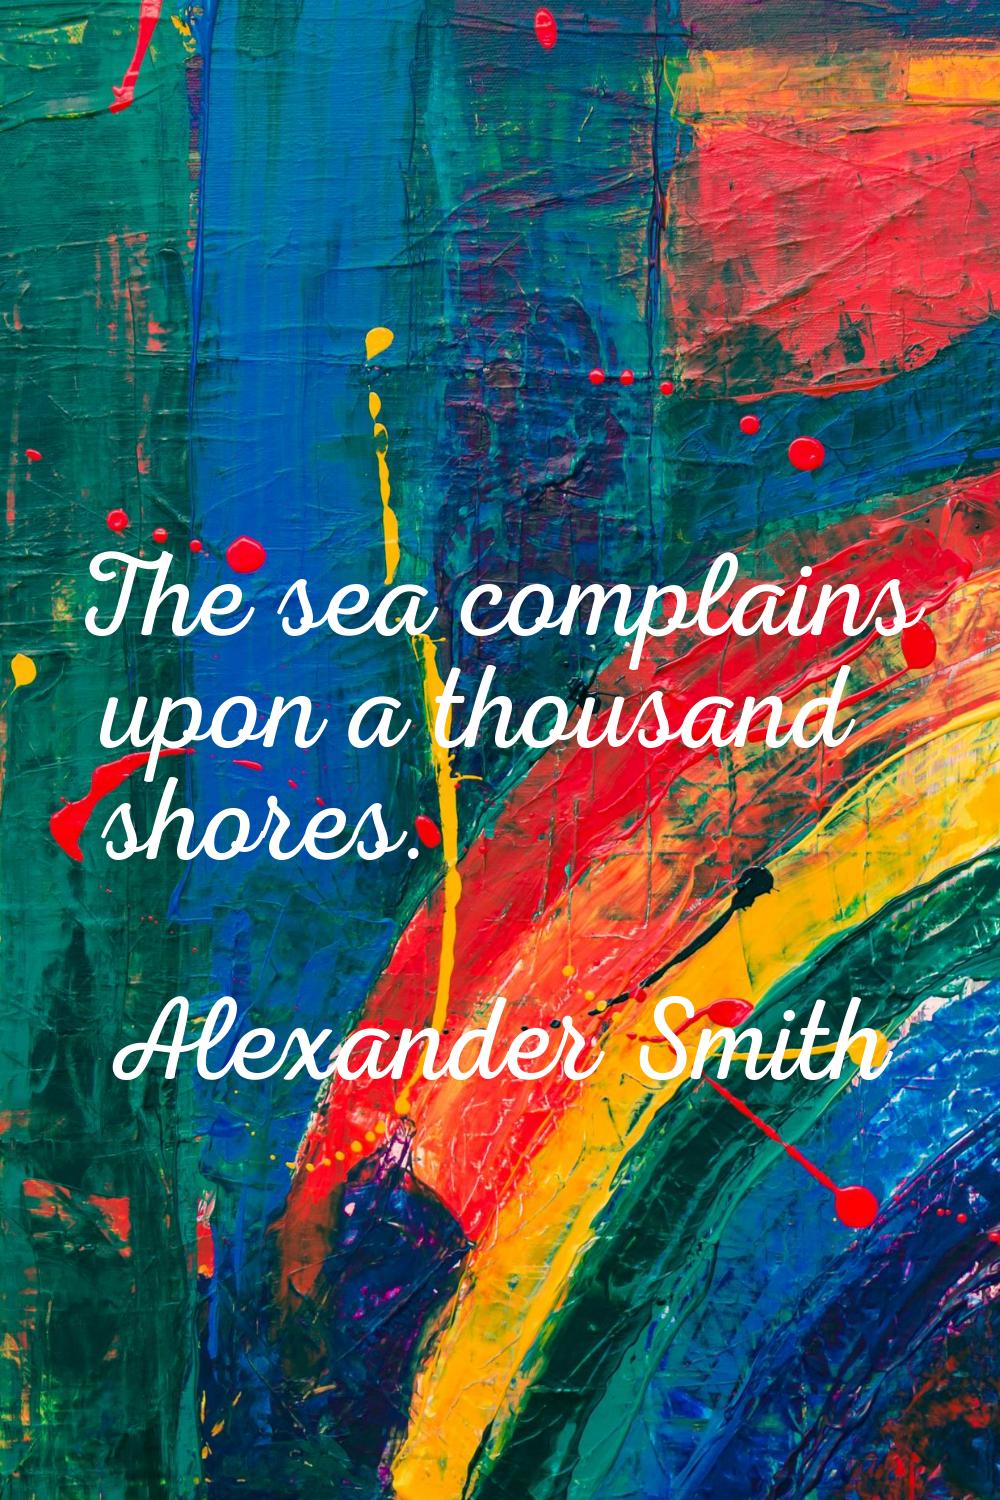 The sea complains upon a thousand shores.